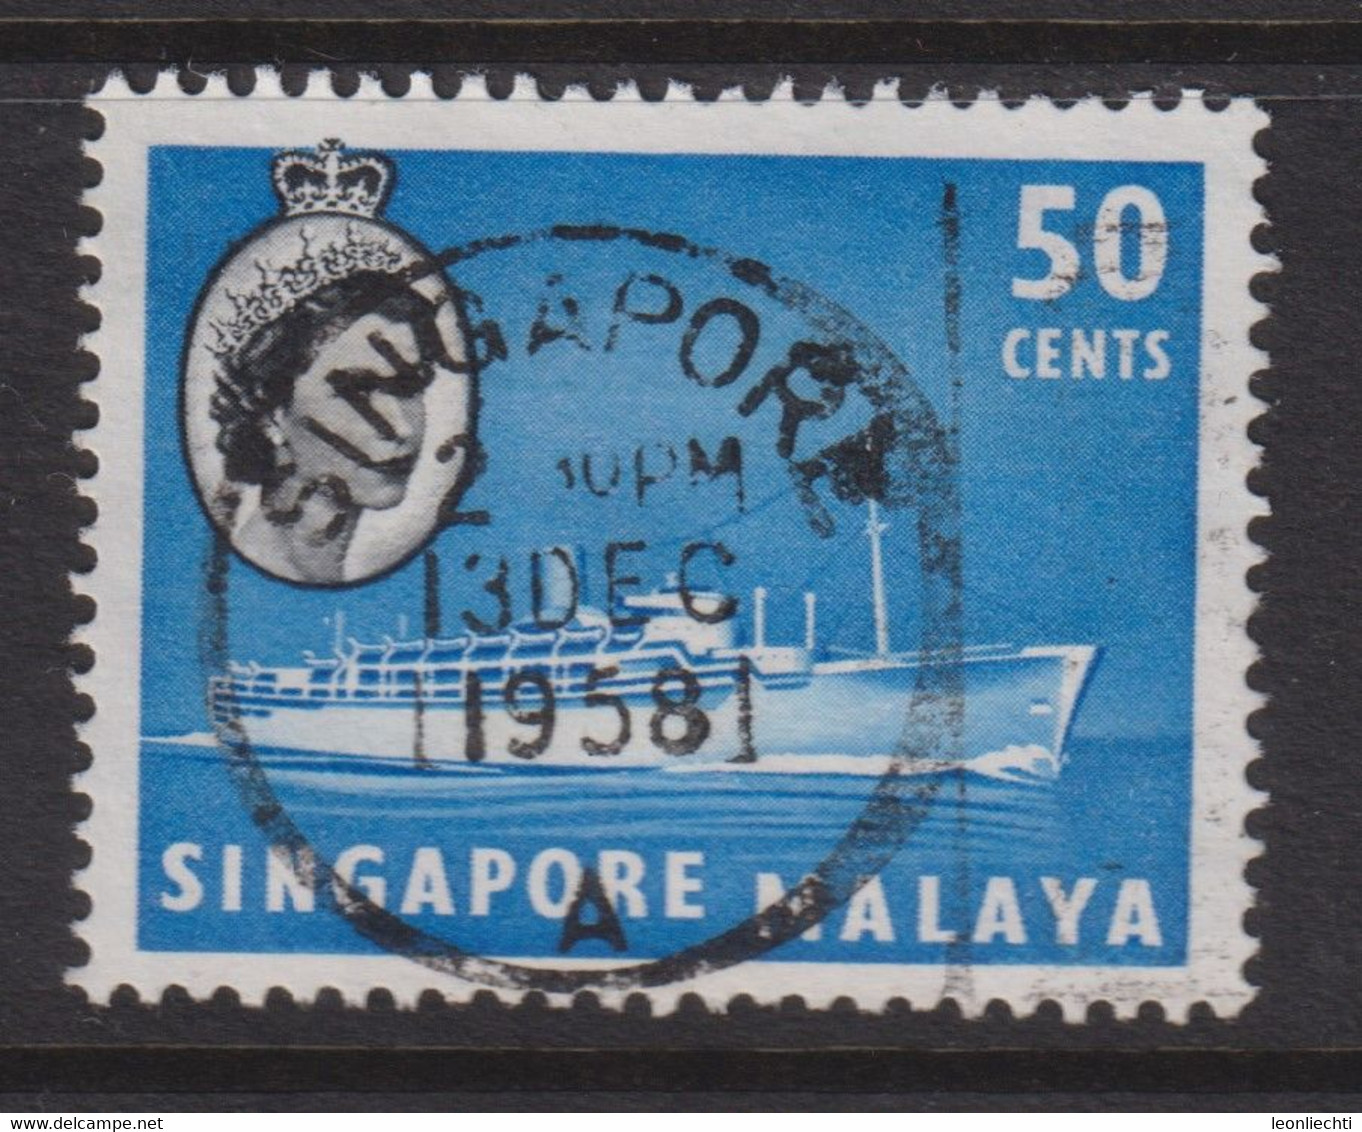 1955 Singapur - Malaya, Mi: SG 39 / Yt:SG 39, Chusan III (Liner) - Singapore (...-1959)